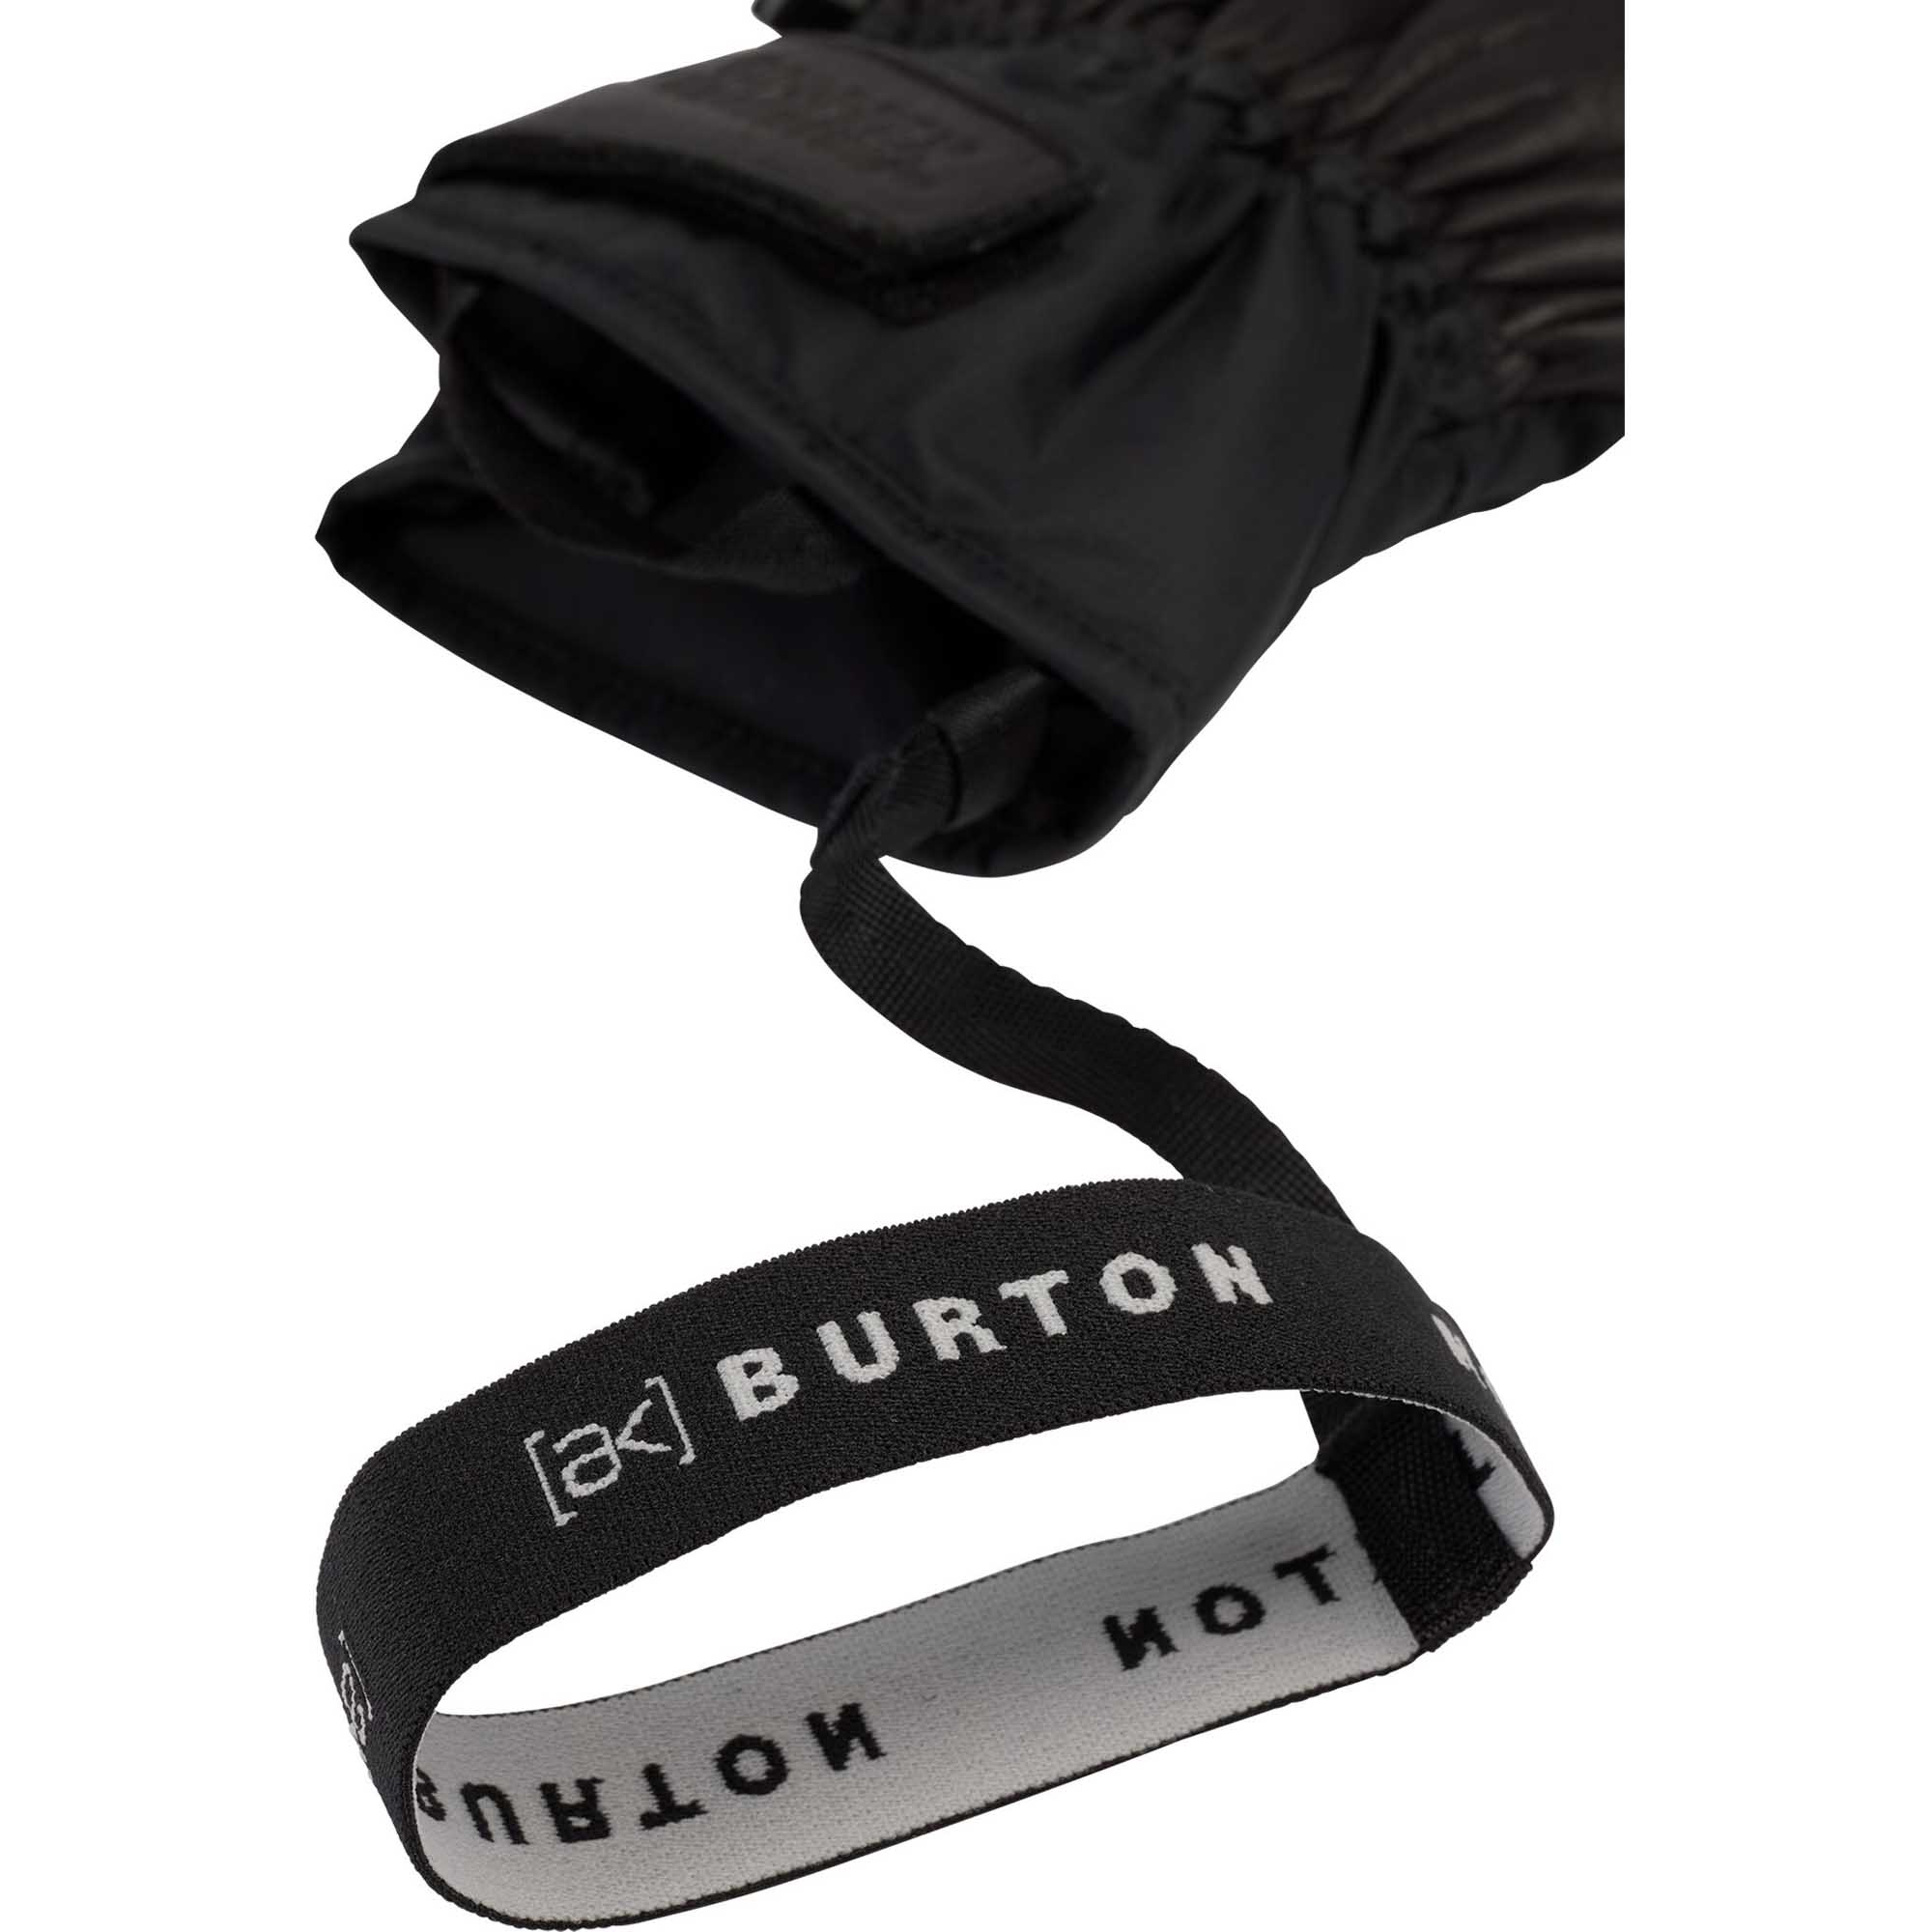 Burton [ak] Clutch Leather Gore-Tex Ski/Snowboard Gloves